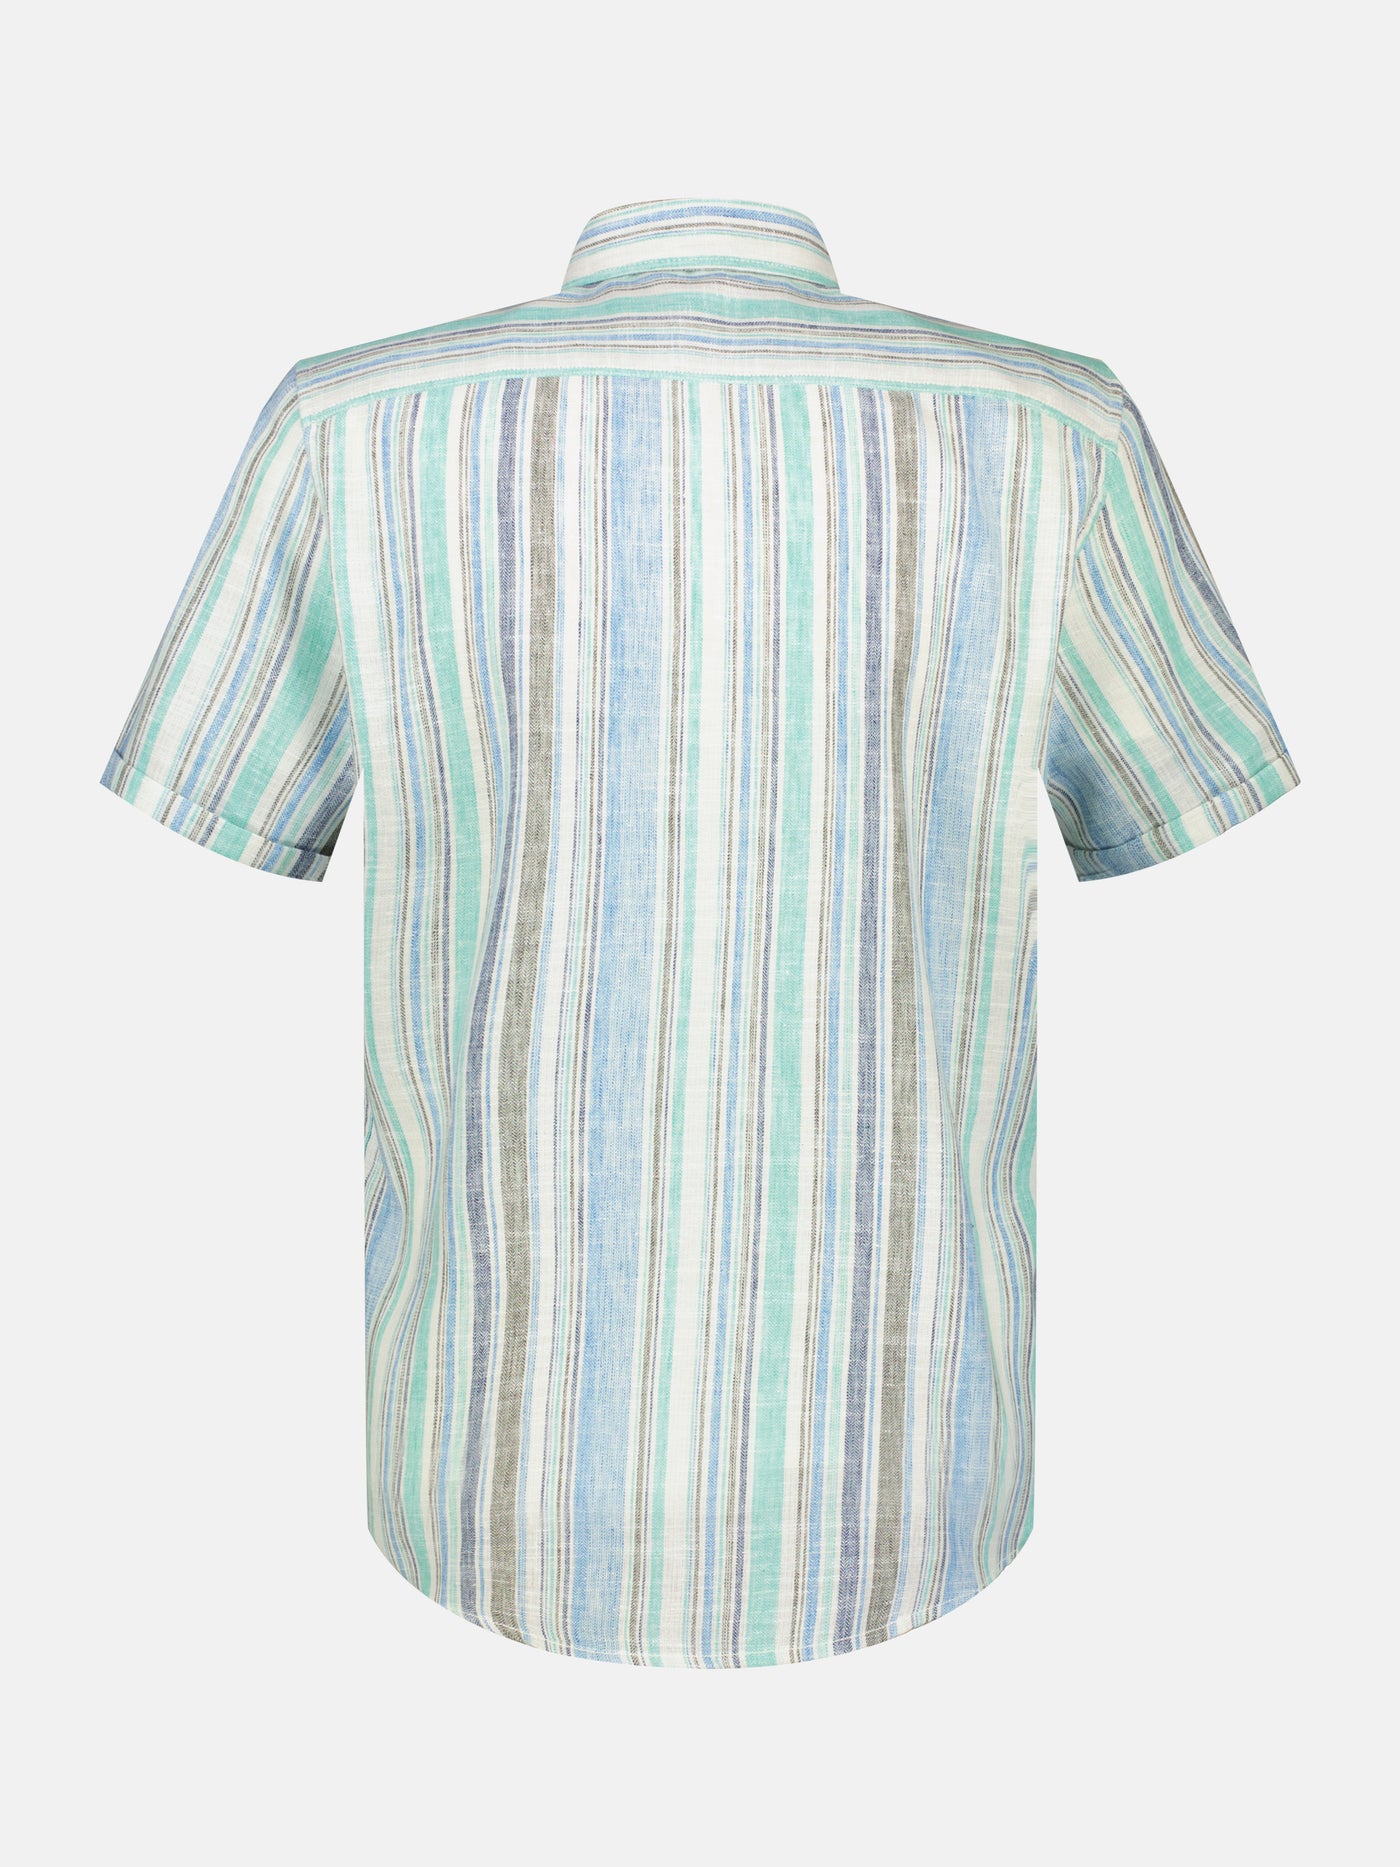 Men's striped short sleeve shirt